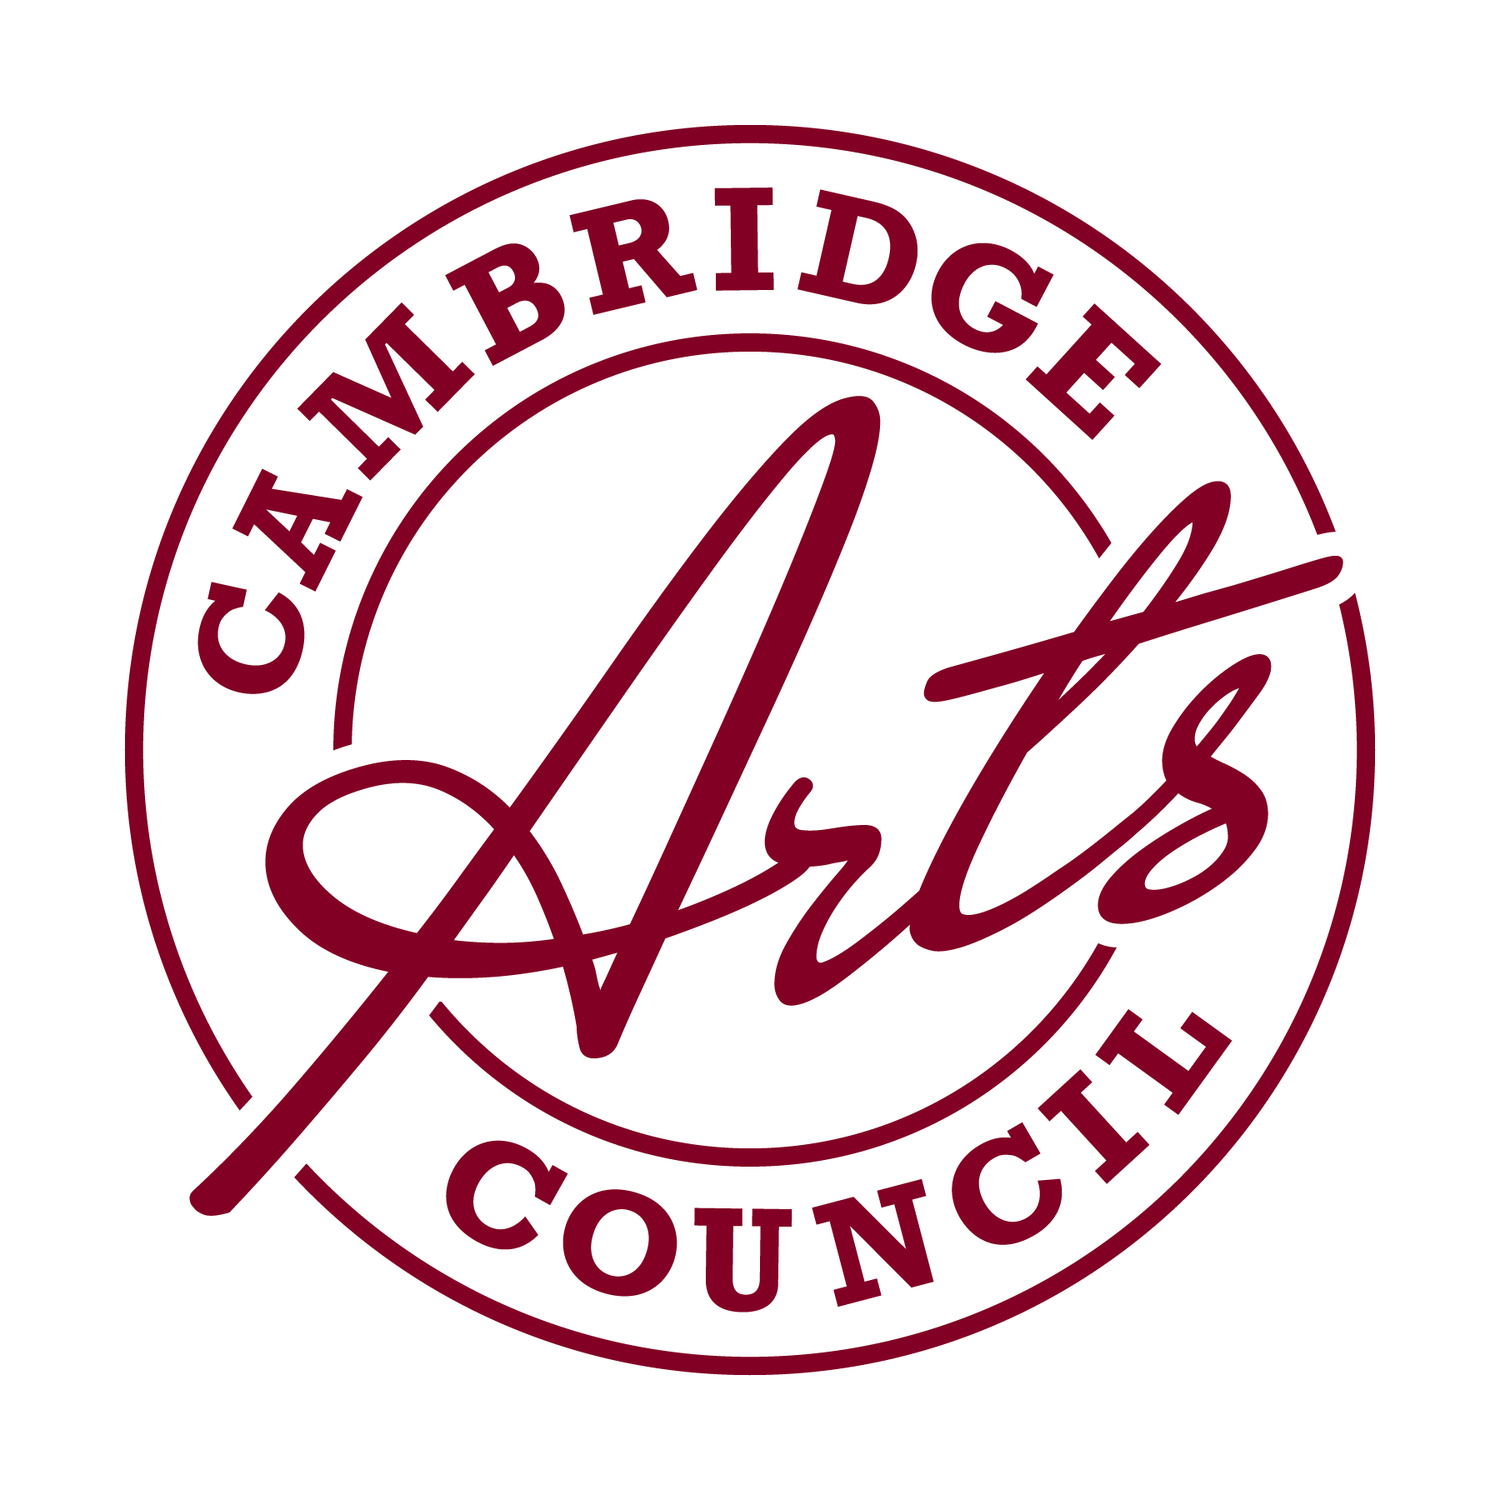 Cambridge Arts Council